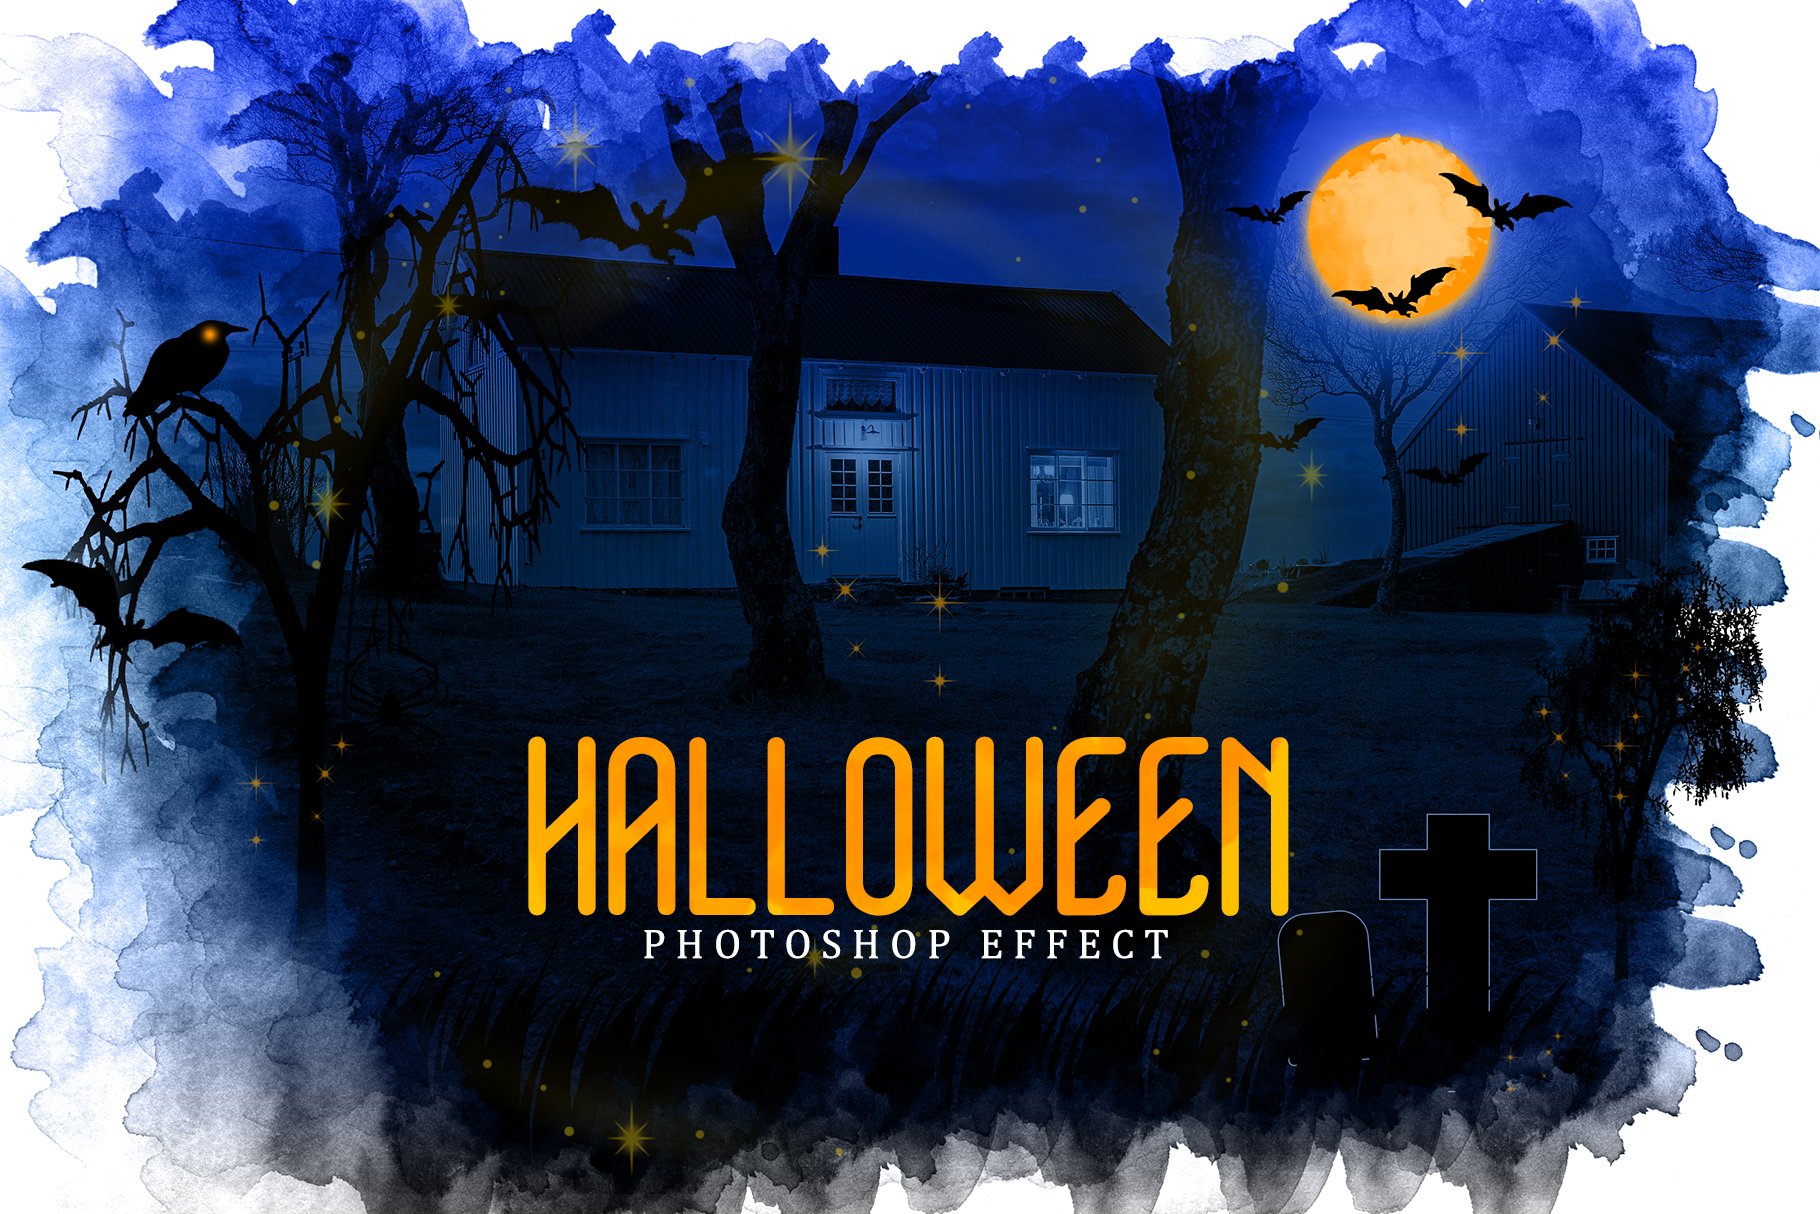 Halloween Photoshop Effectcover image.